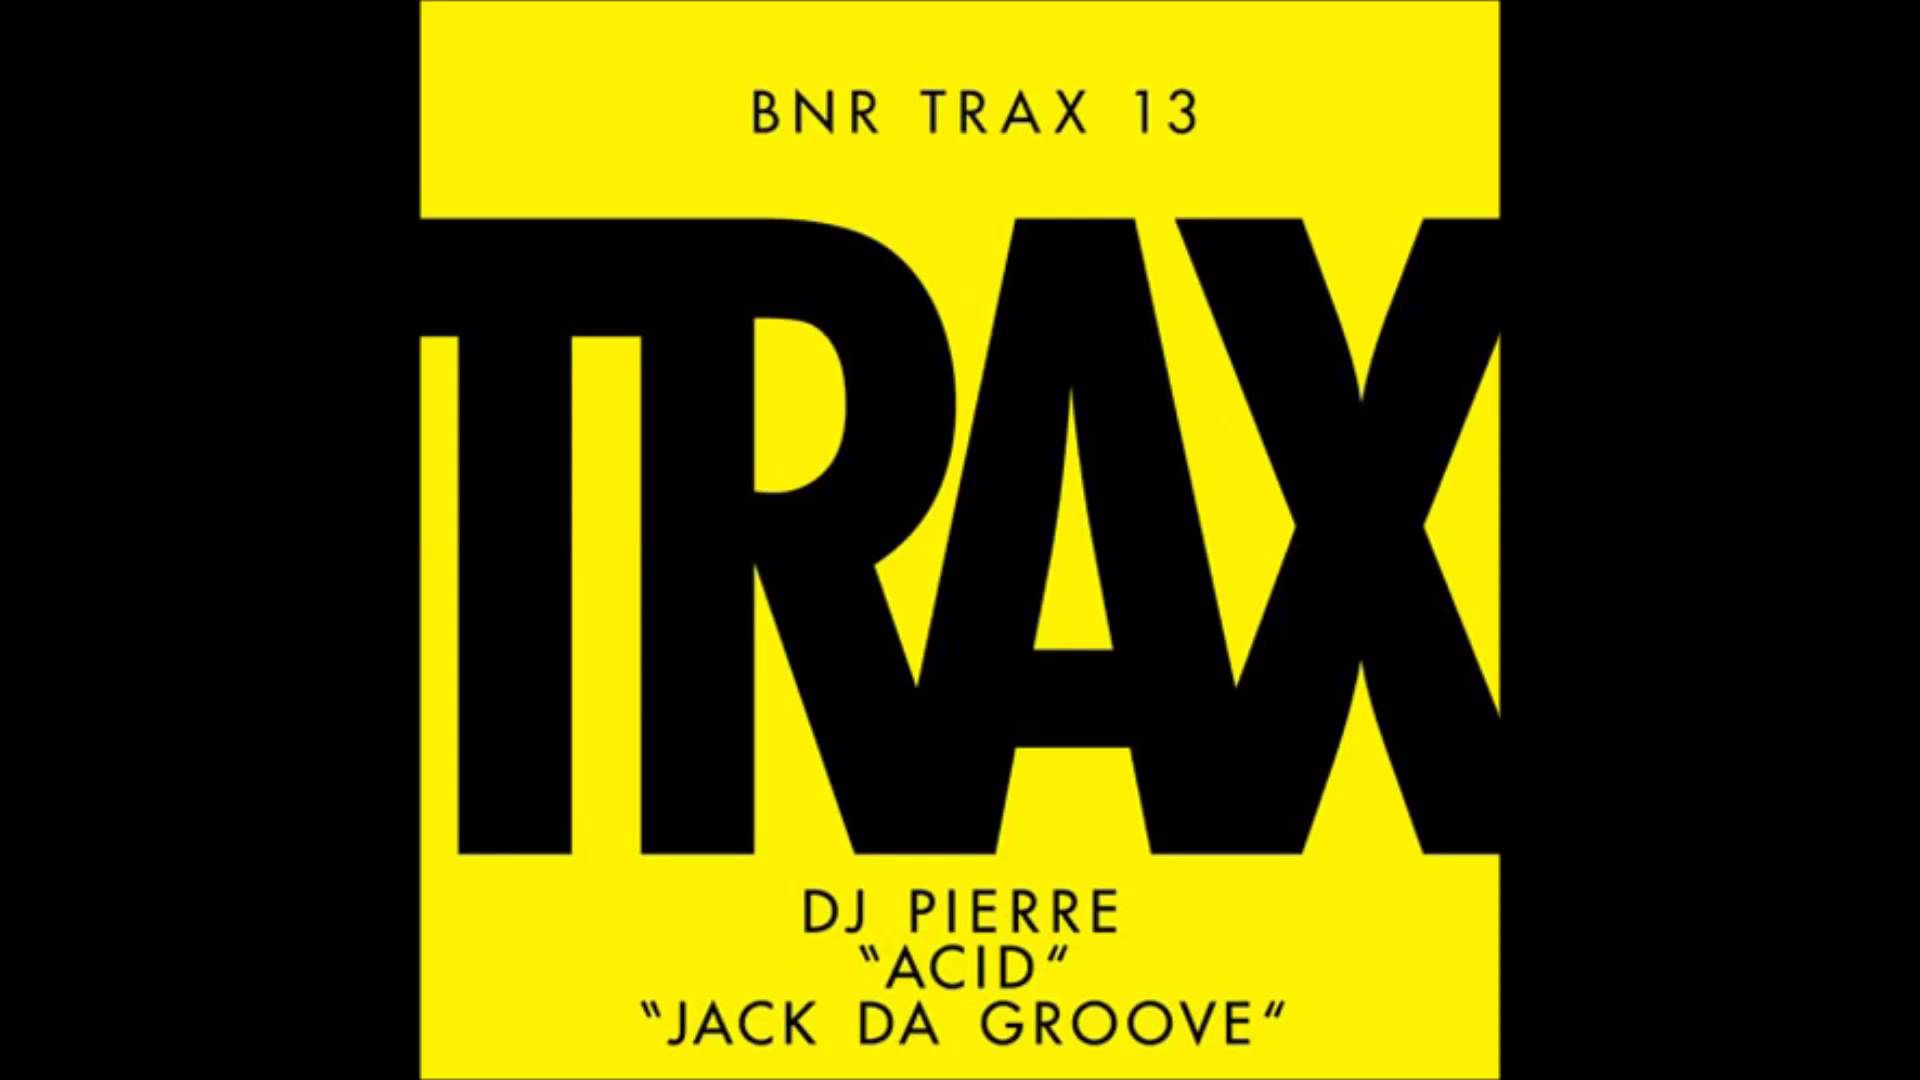 DJ Pierre - ACID (Pierre's Acid Face Mix)